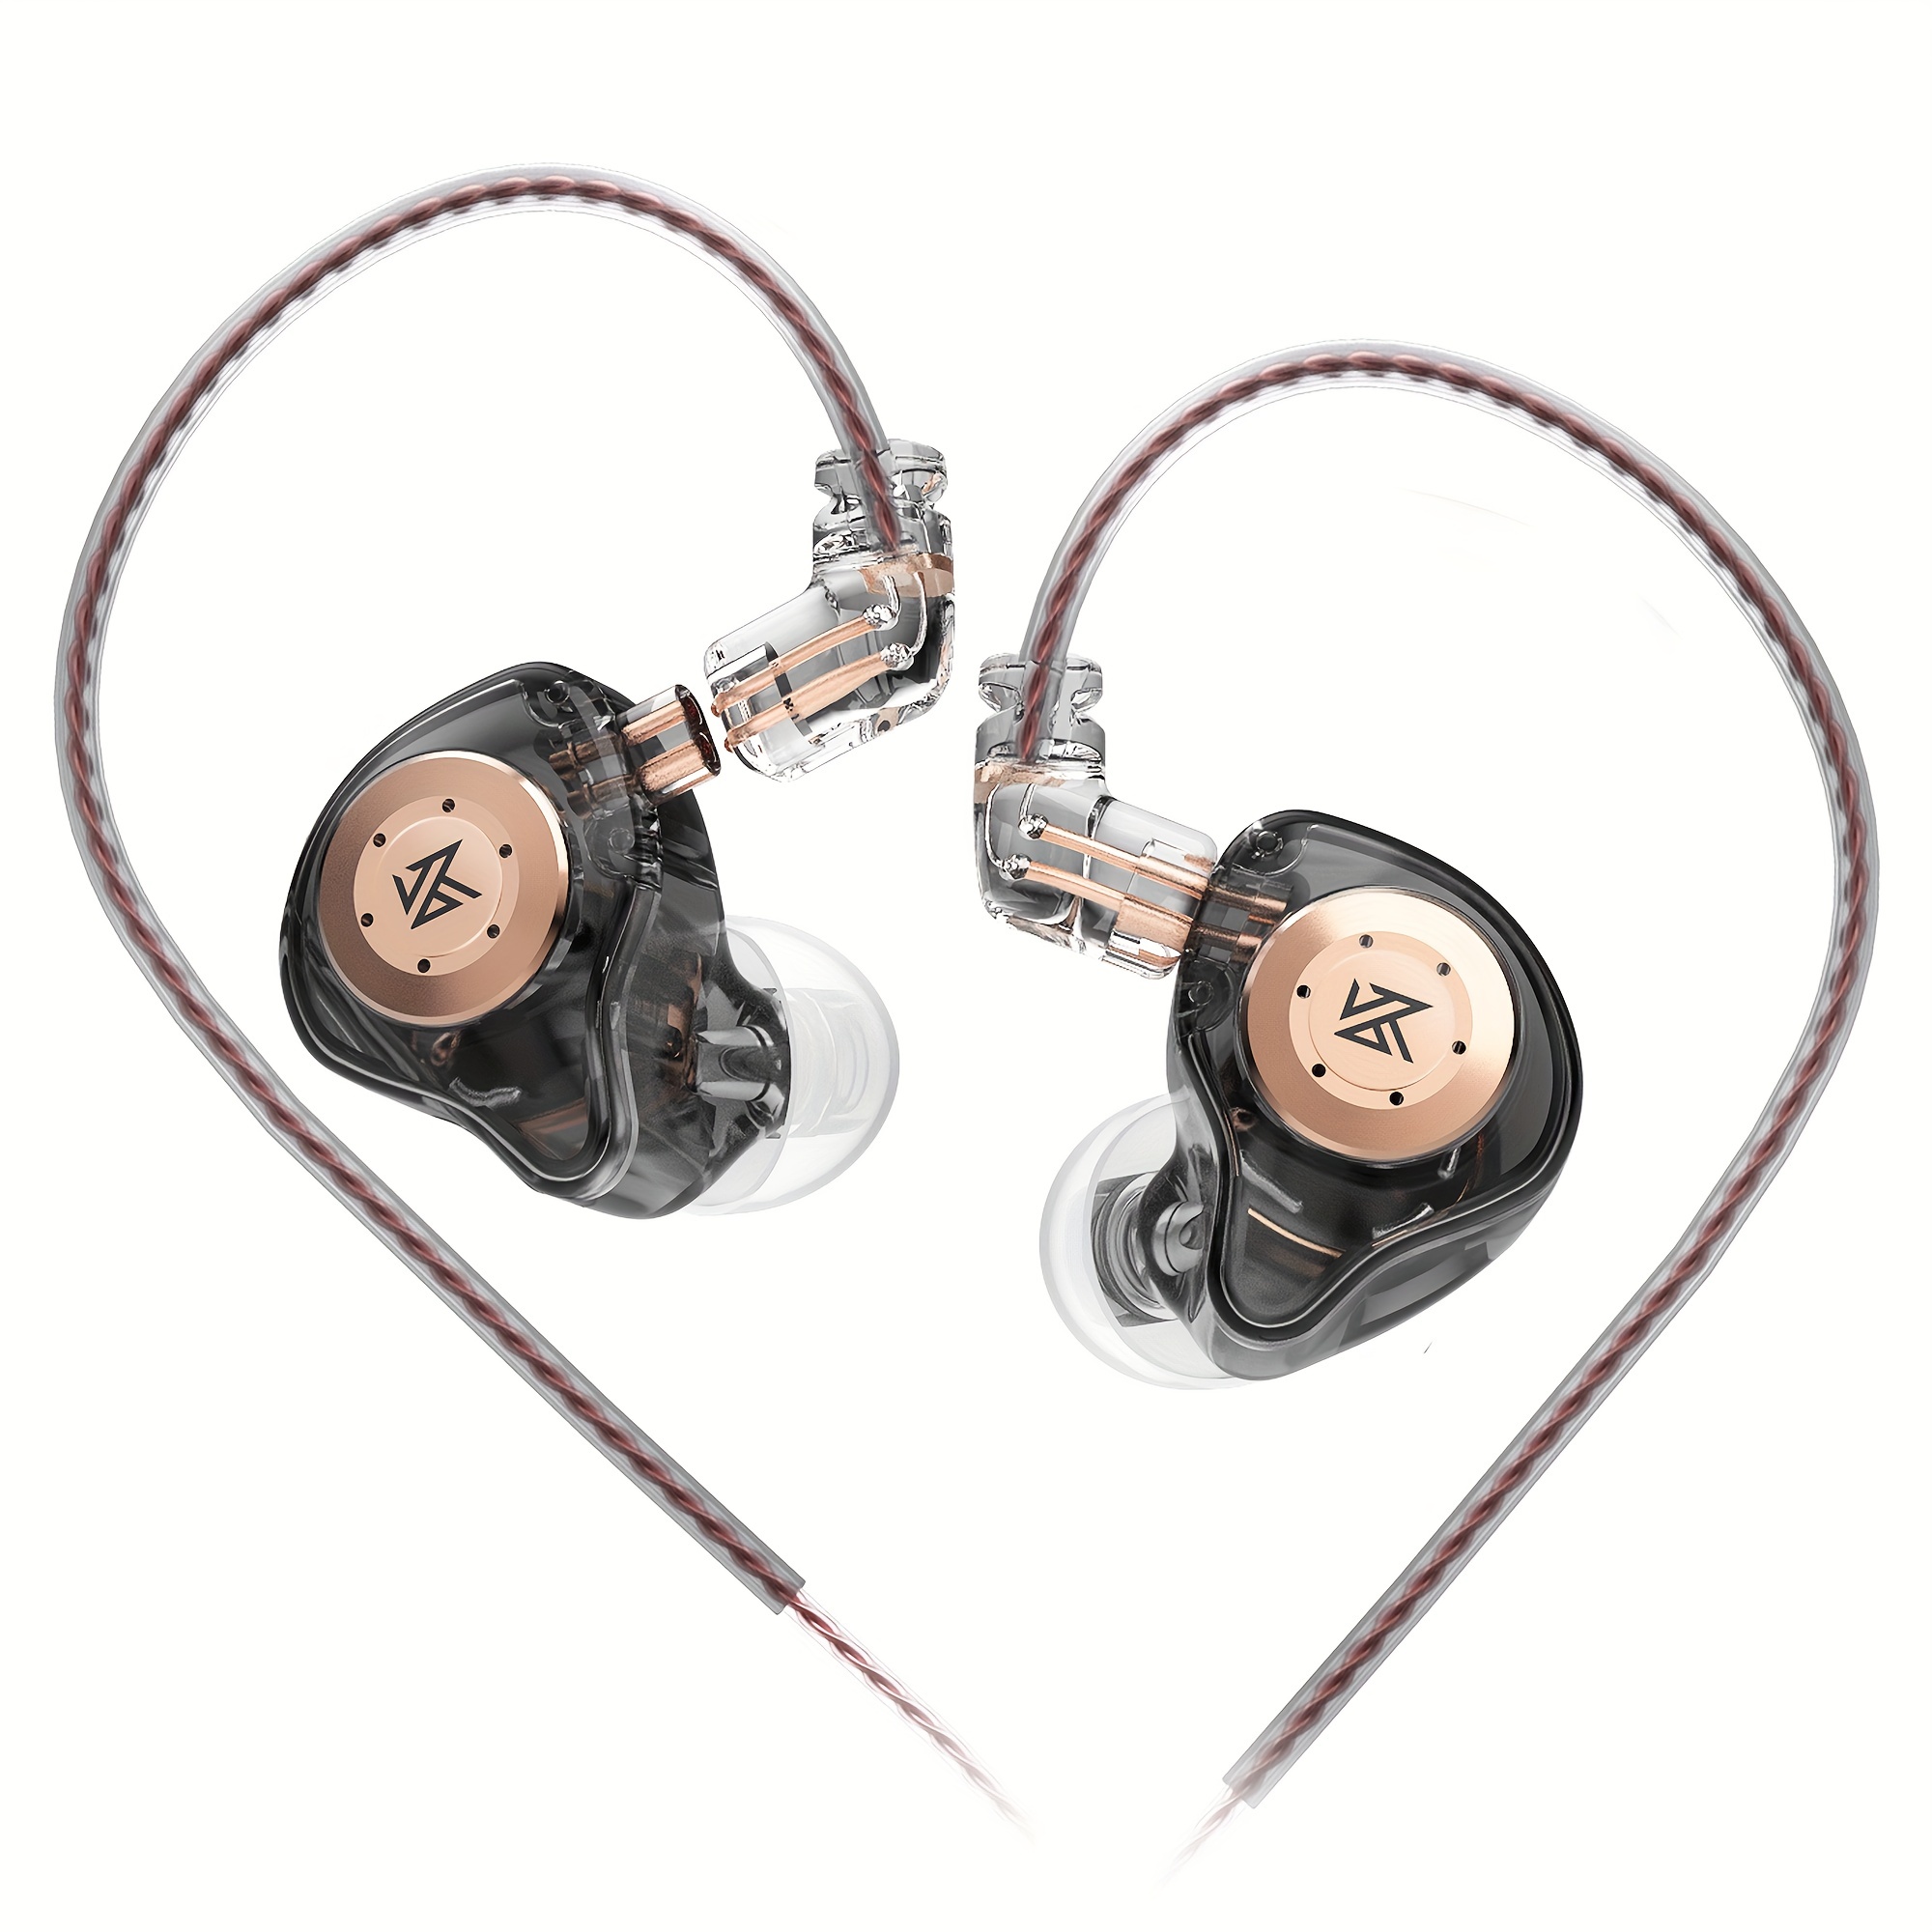 KZ-EDX Pro 3.5mm Wired Headphones HIFI Bass Earbuds Games Earphones with Mic